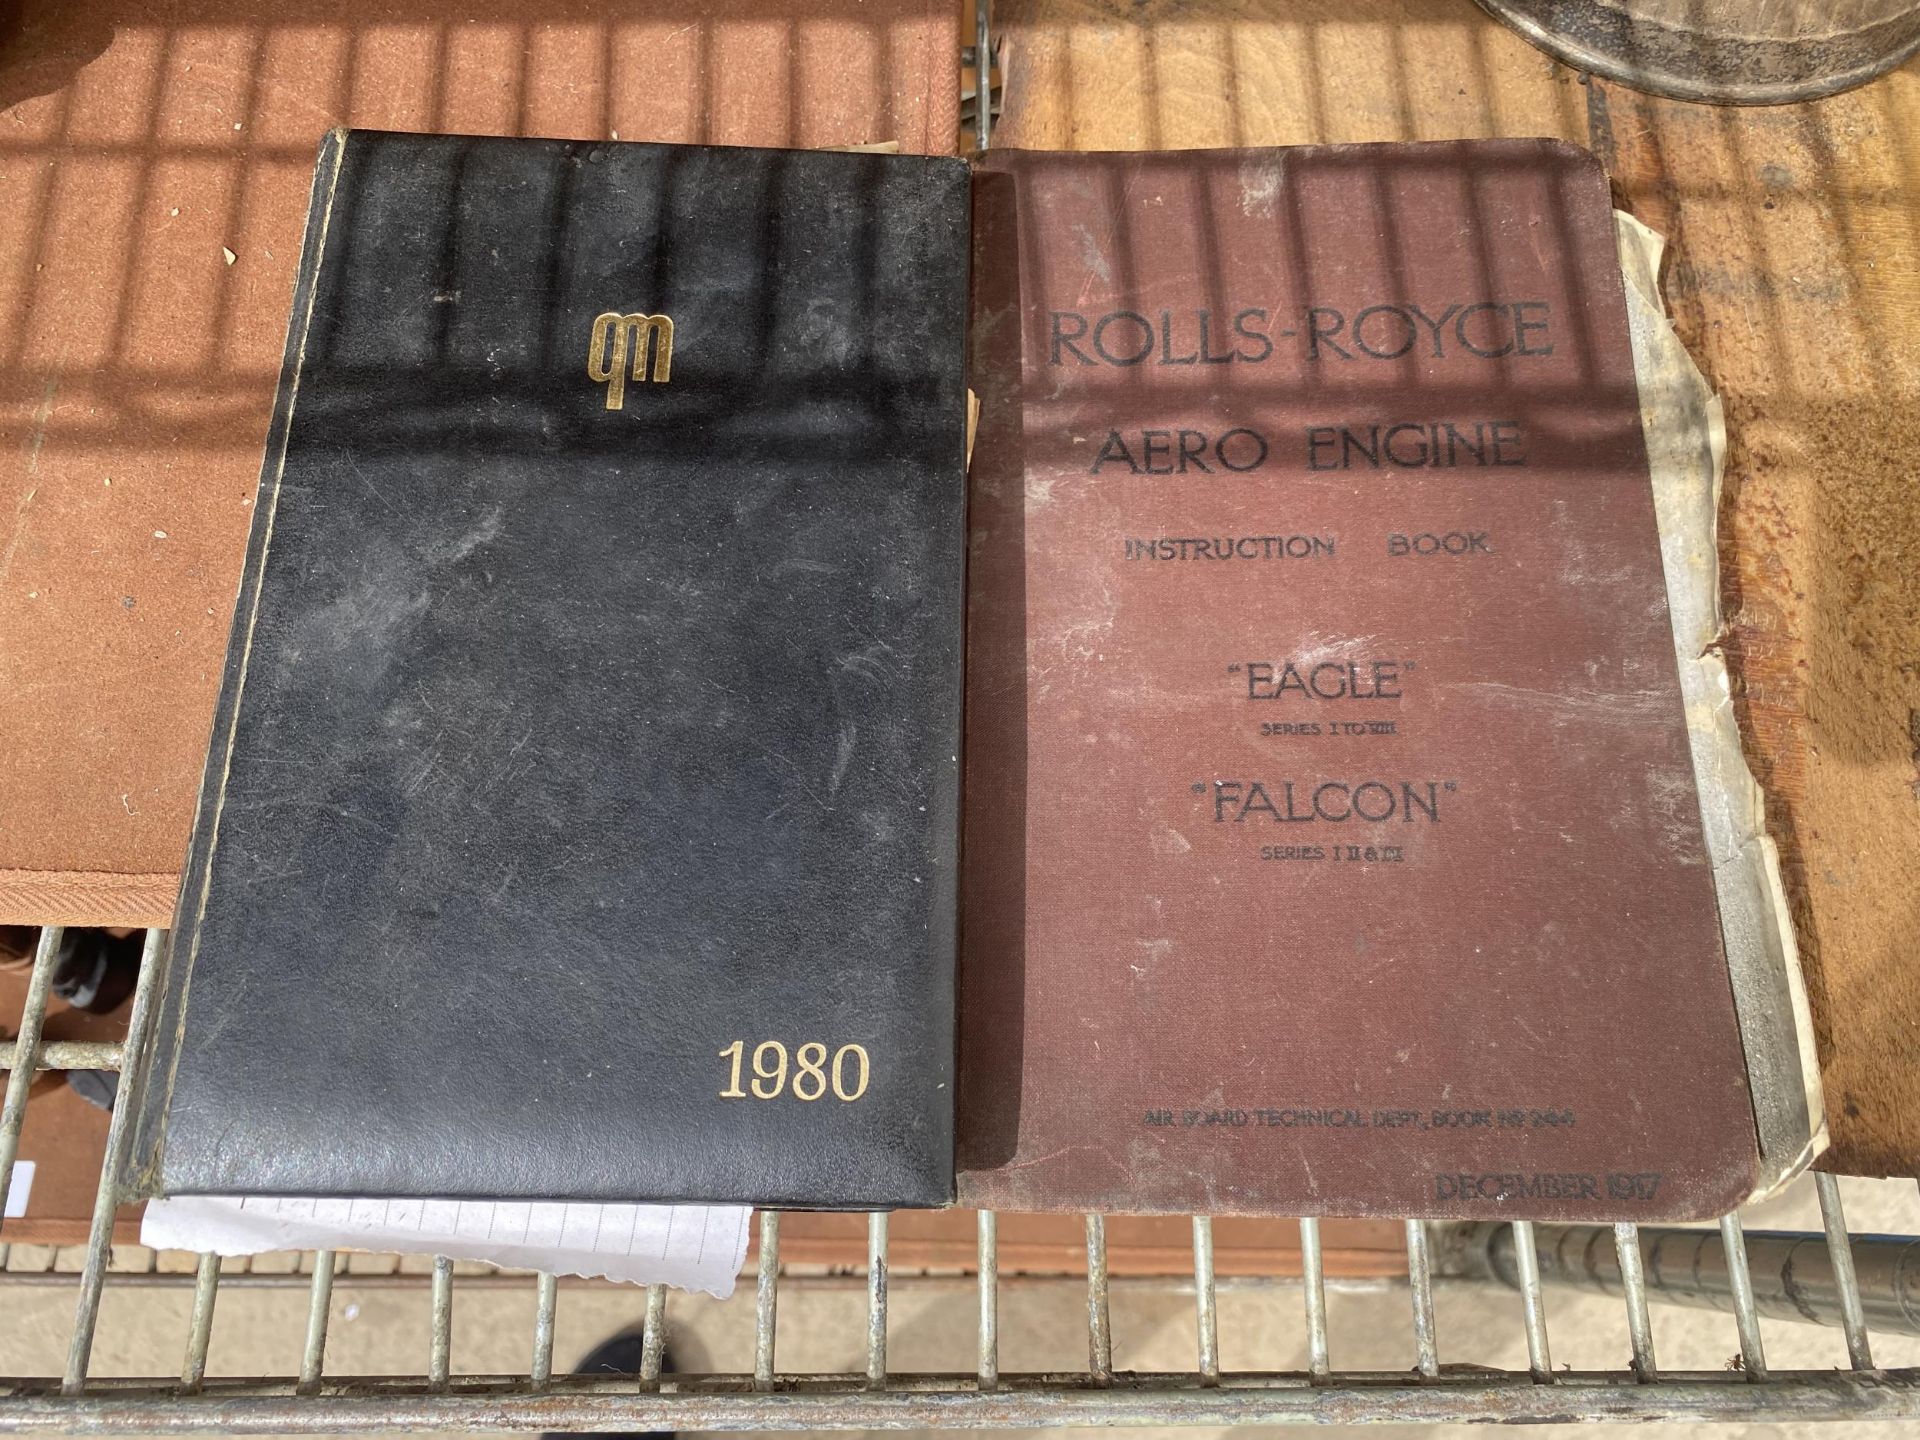 TWO VINTAGE BOOKS - 1917 ROLLS ROYCE AERO ENGINE INSTRUCTION BOOK ETC